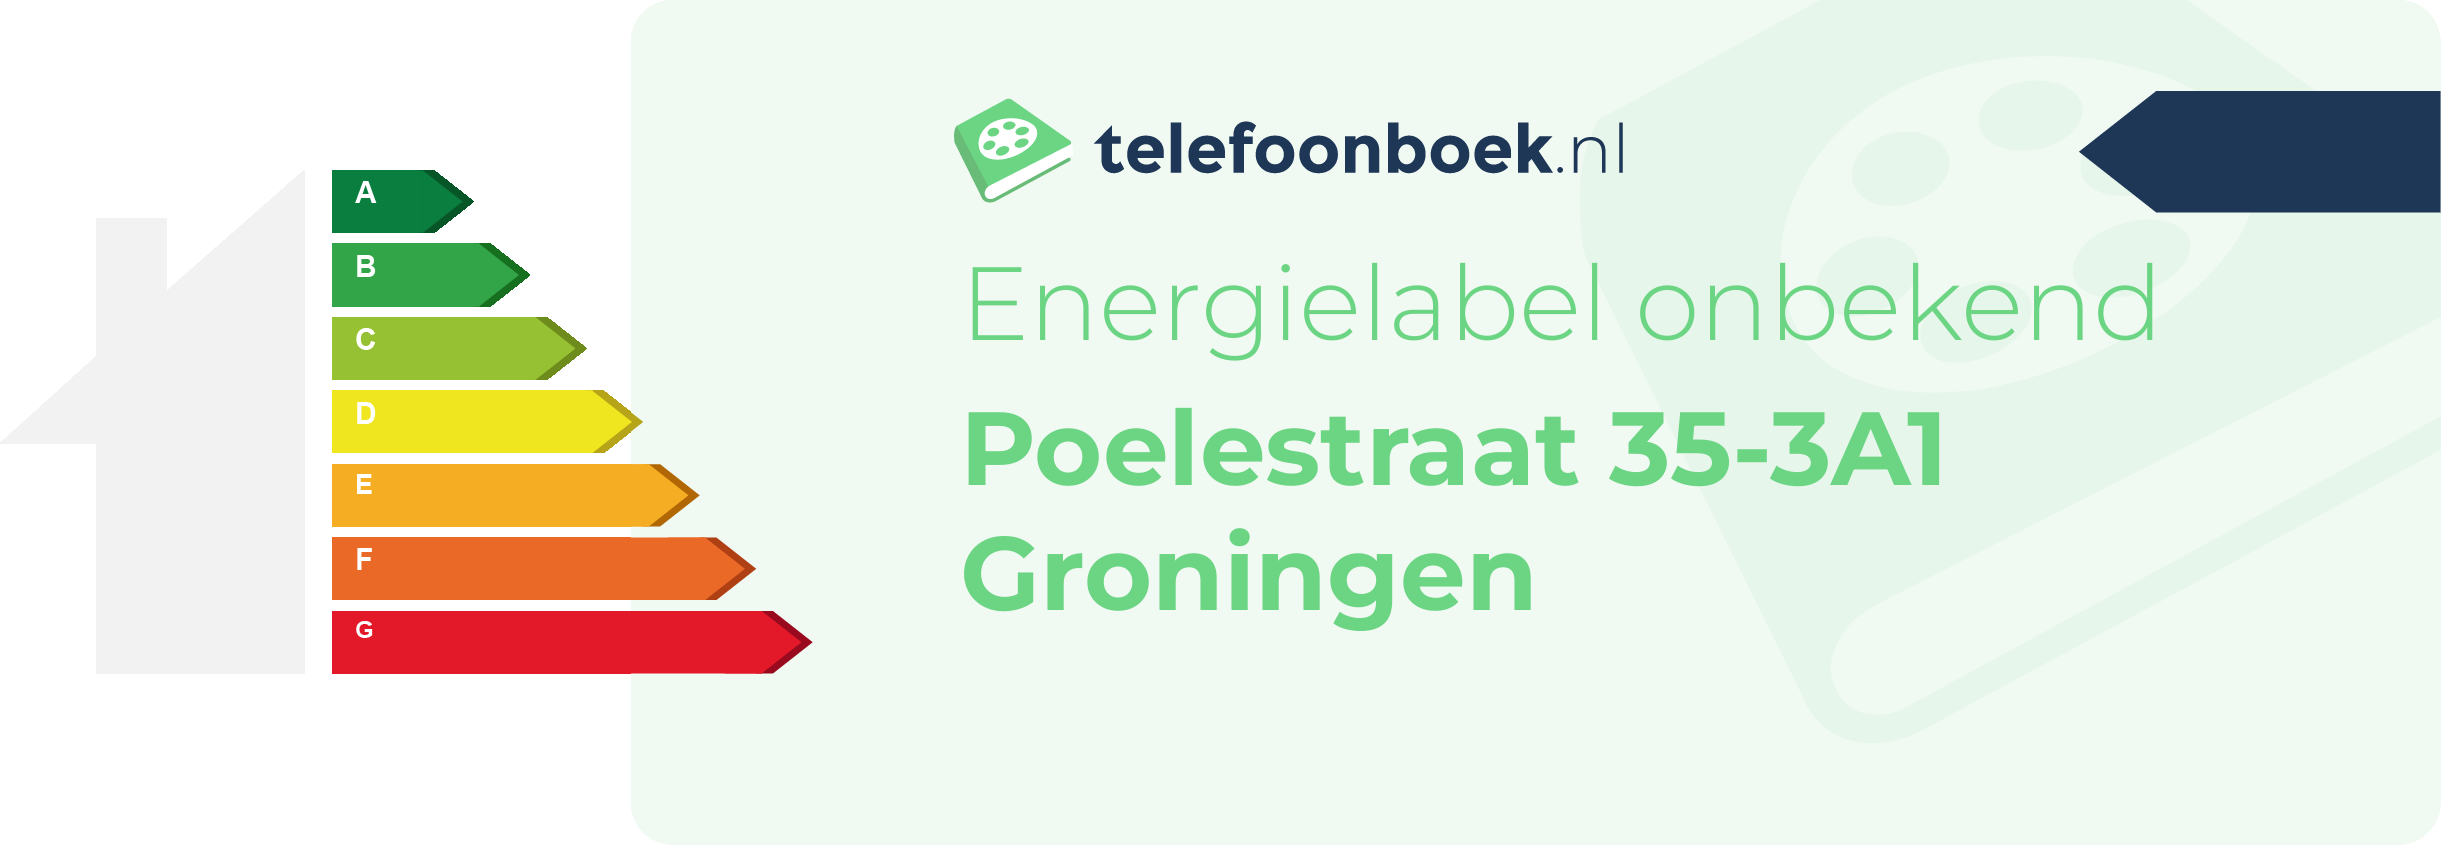 Energielabel Poelestraat 35-3A1 Groningen